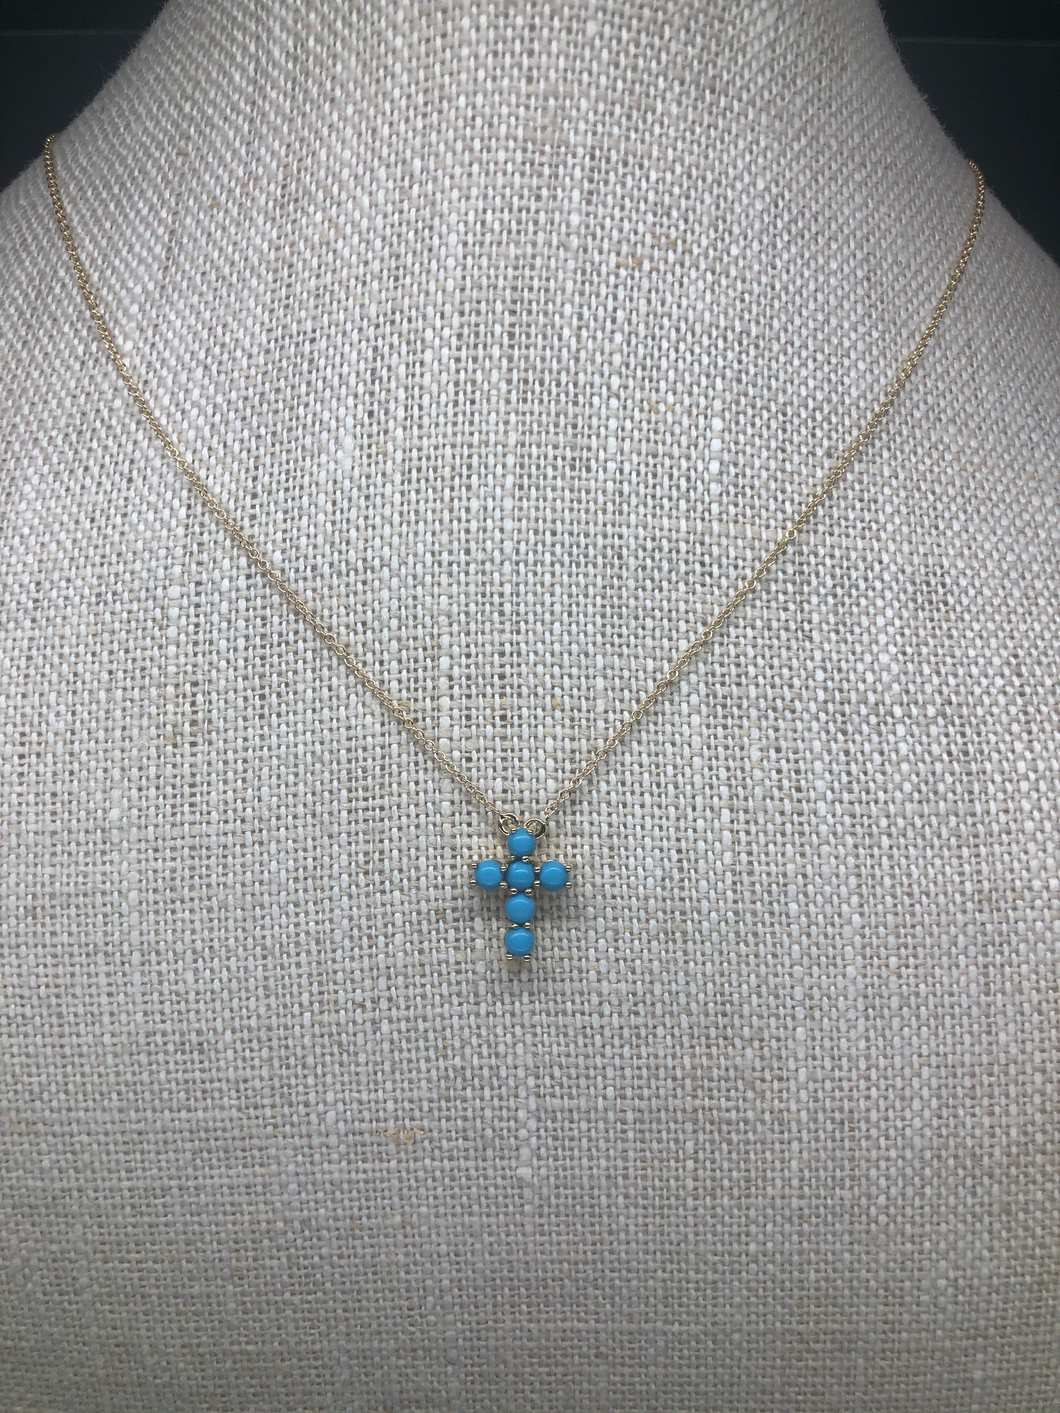 Turquoise Gold Cross Pendant